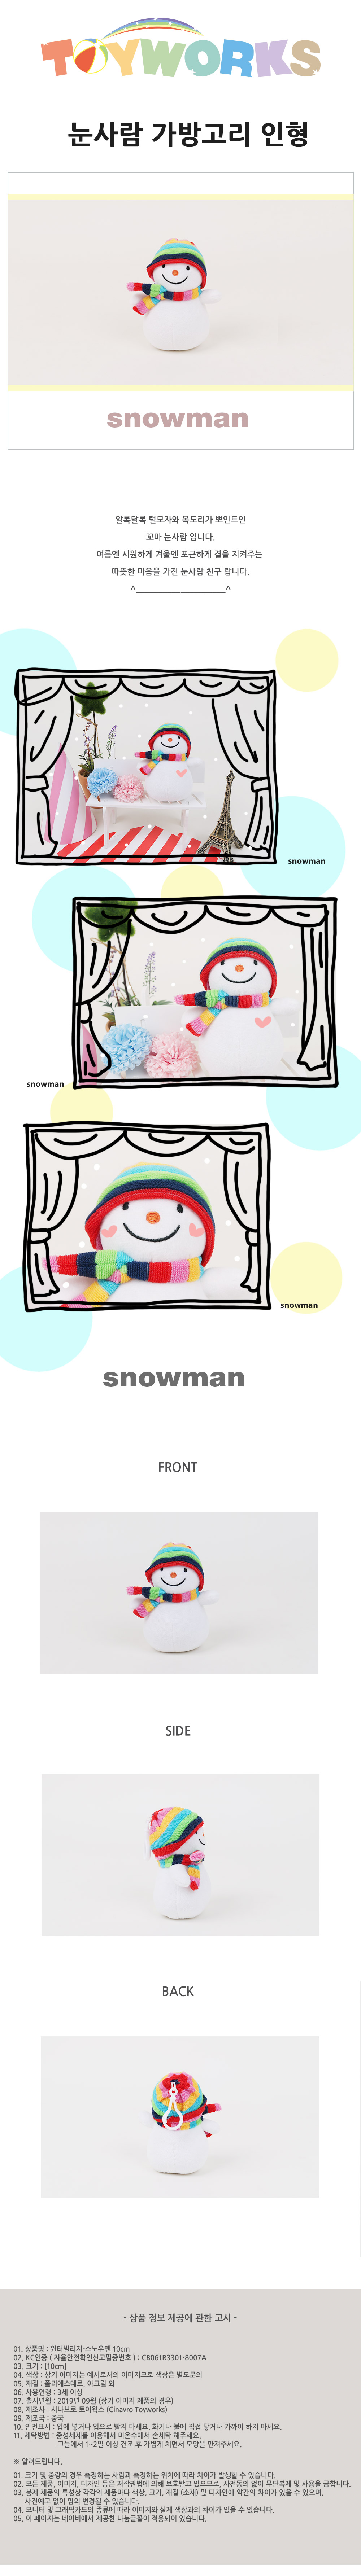 snowmanmini_01.jpg